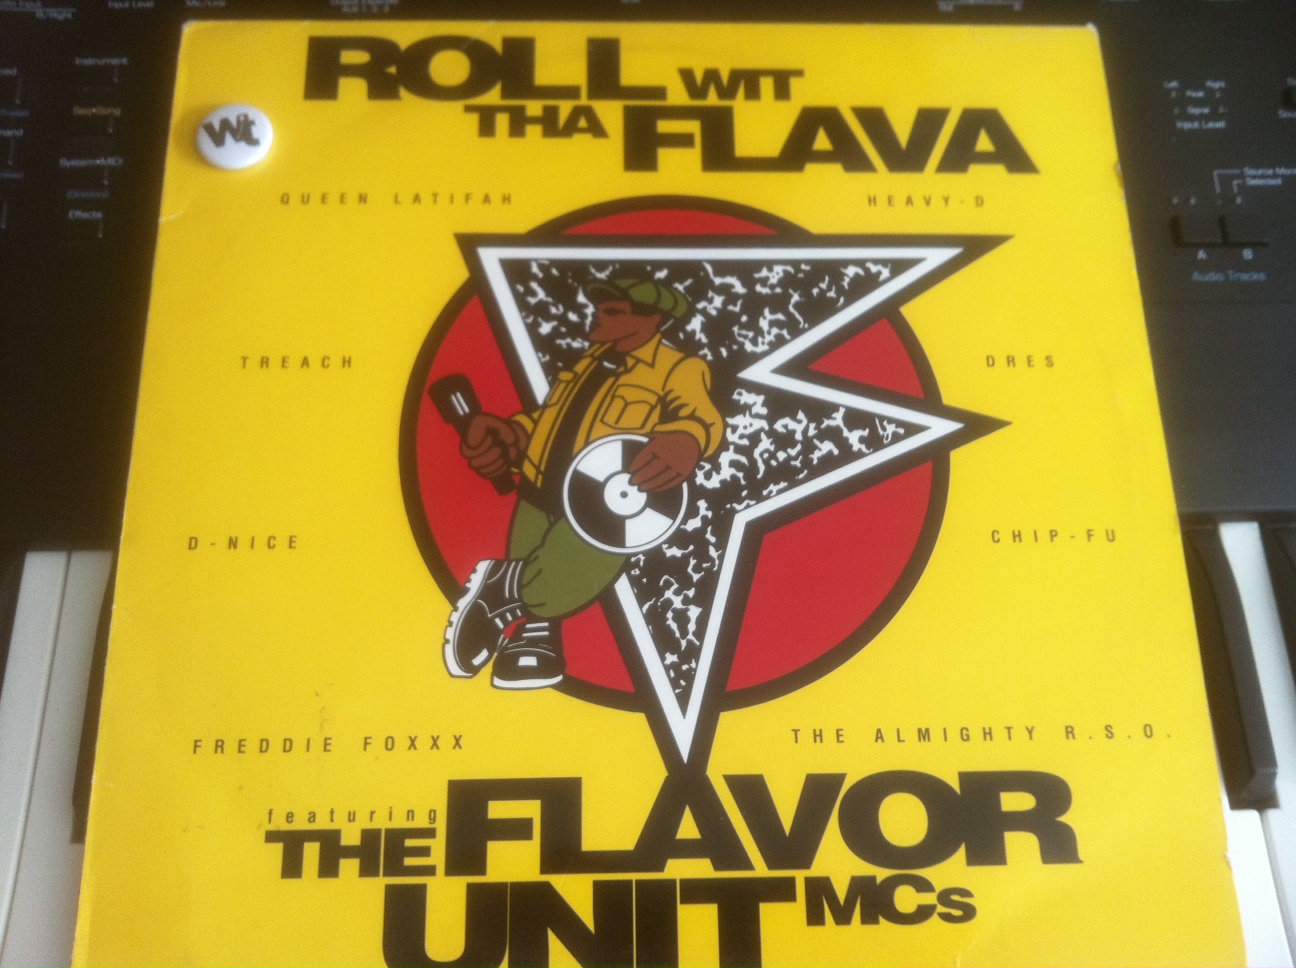 Lae alla Flavor Unit MC's - Roll With Tha Flava (Extended)